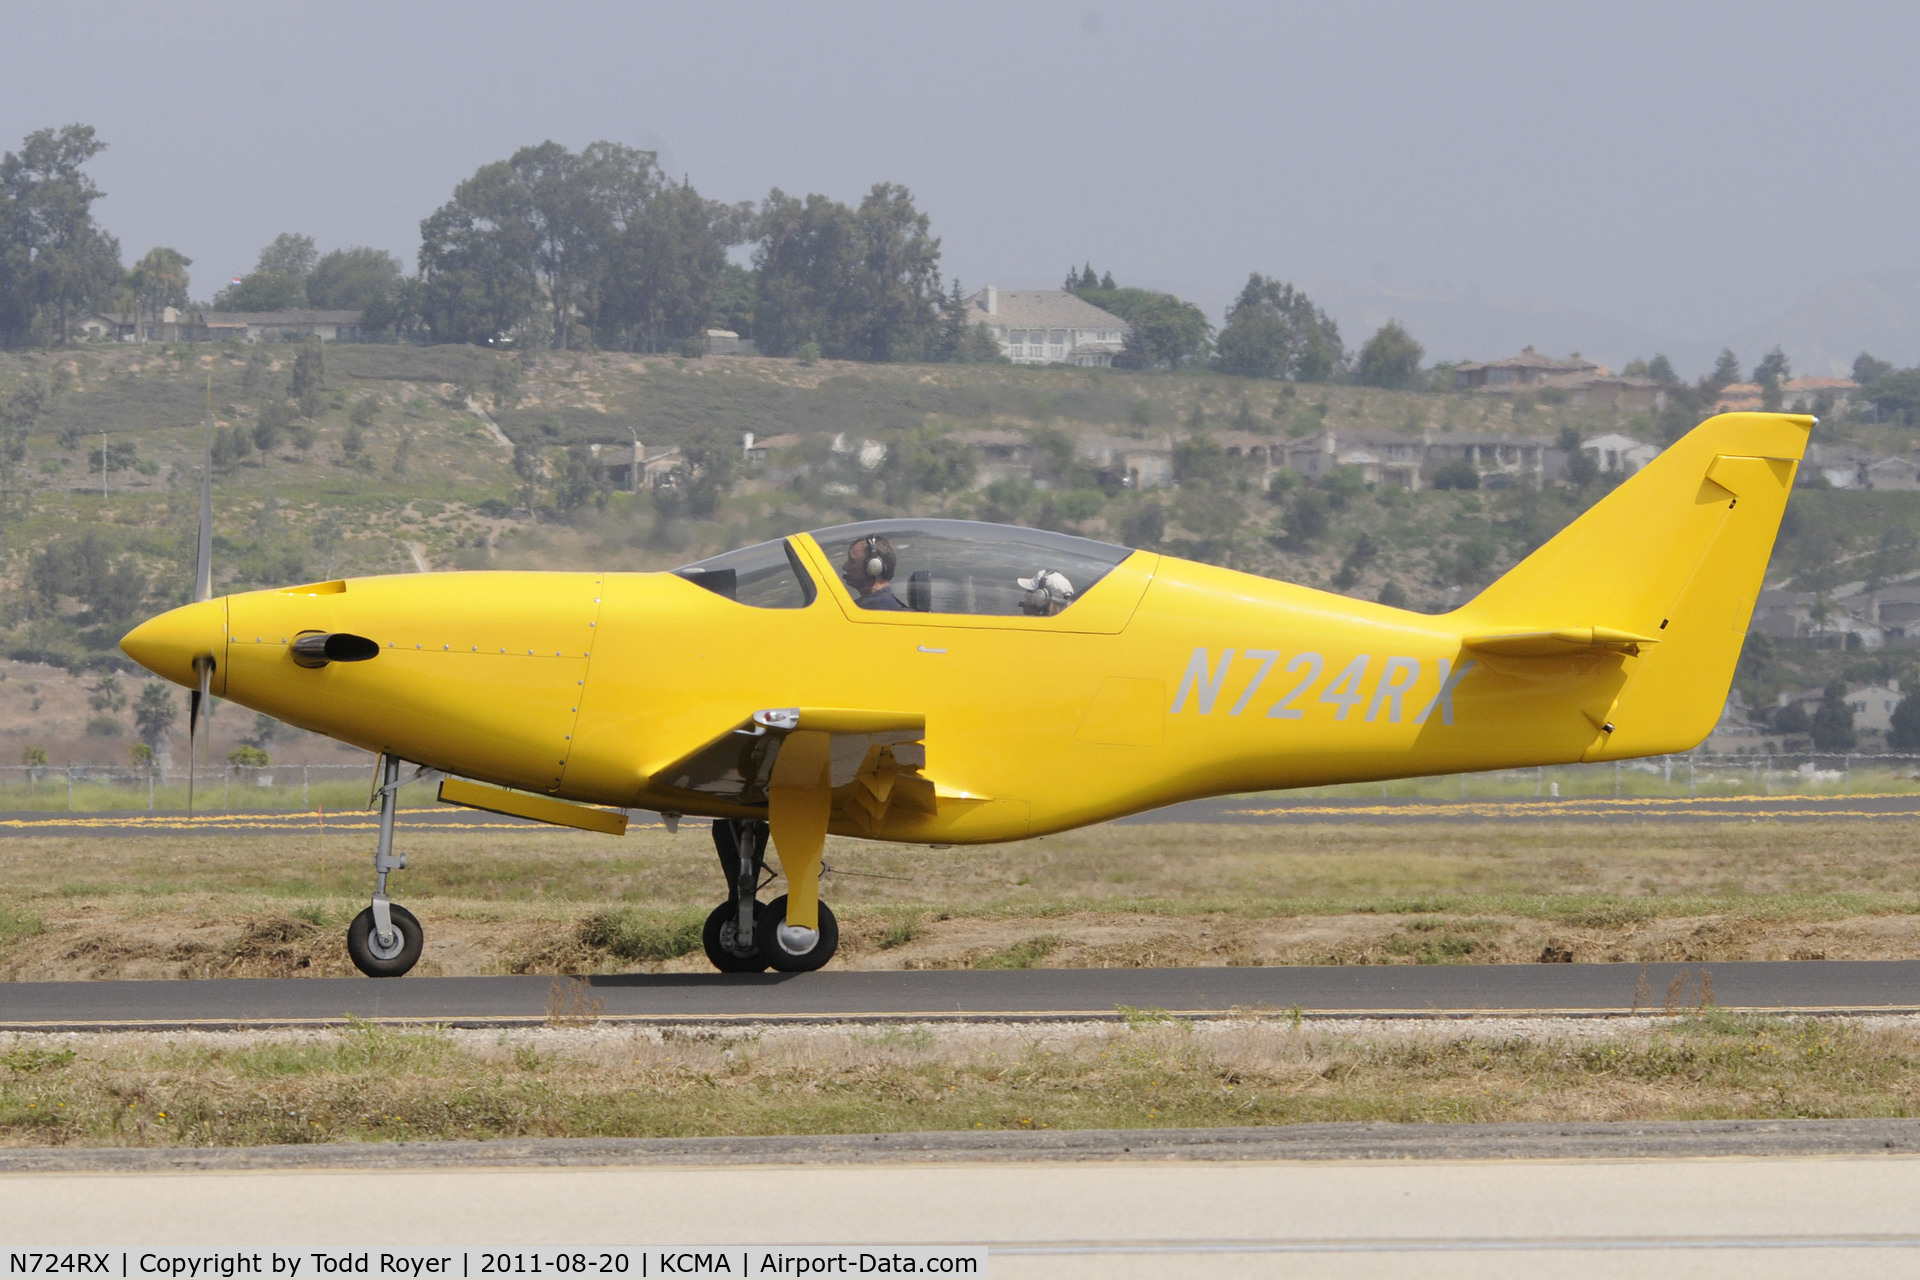 N724RX, 2006 Legend Aircraft Legend C/N 001, Taxi for departure